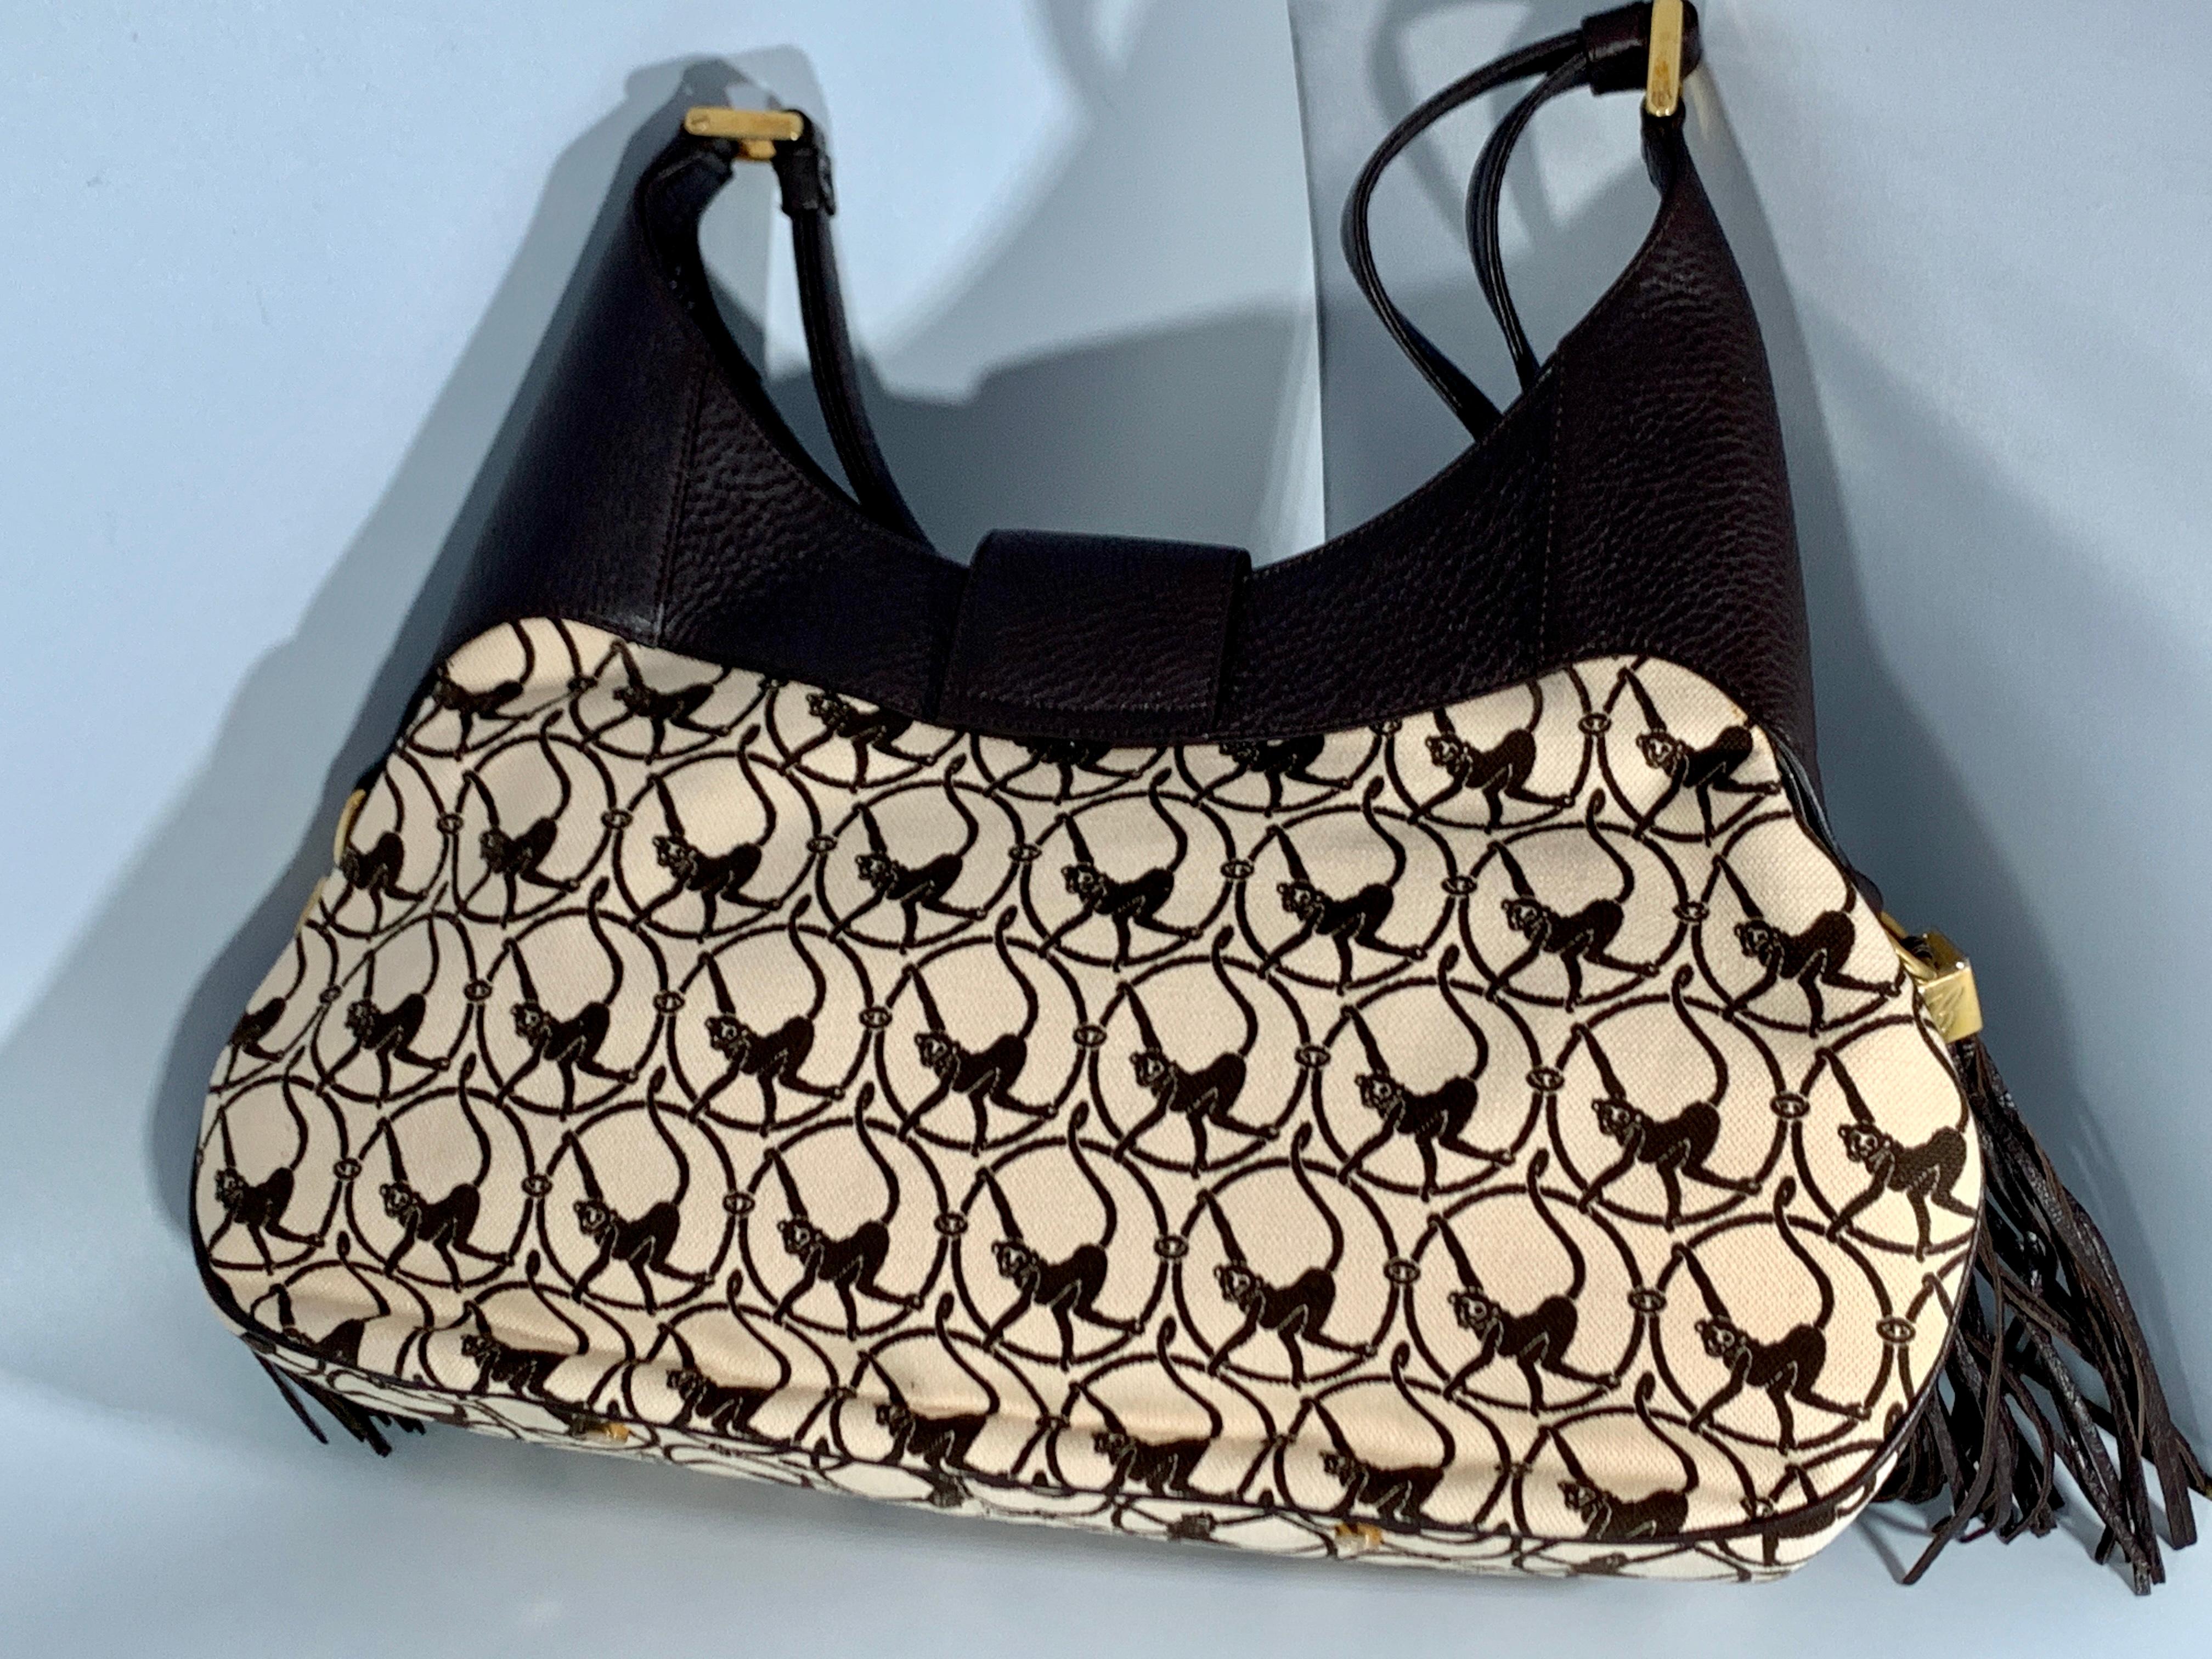 Women's Chopard Madrid Beidge / Camel Color Calfskin & Leather Bag, Brand New